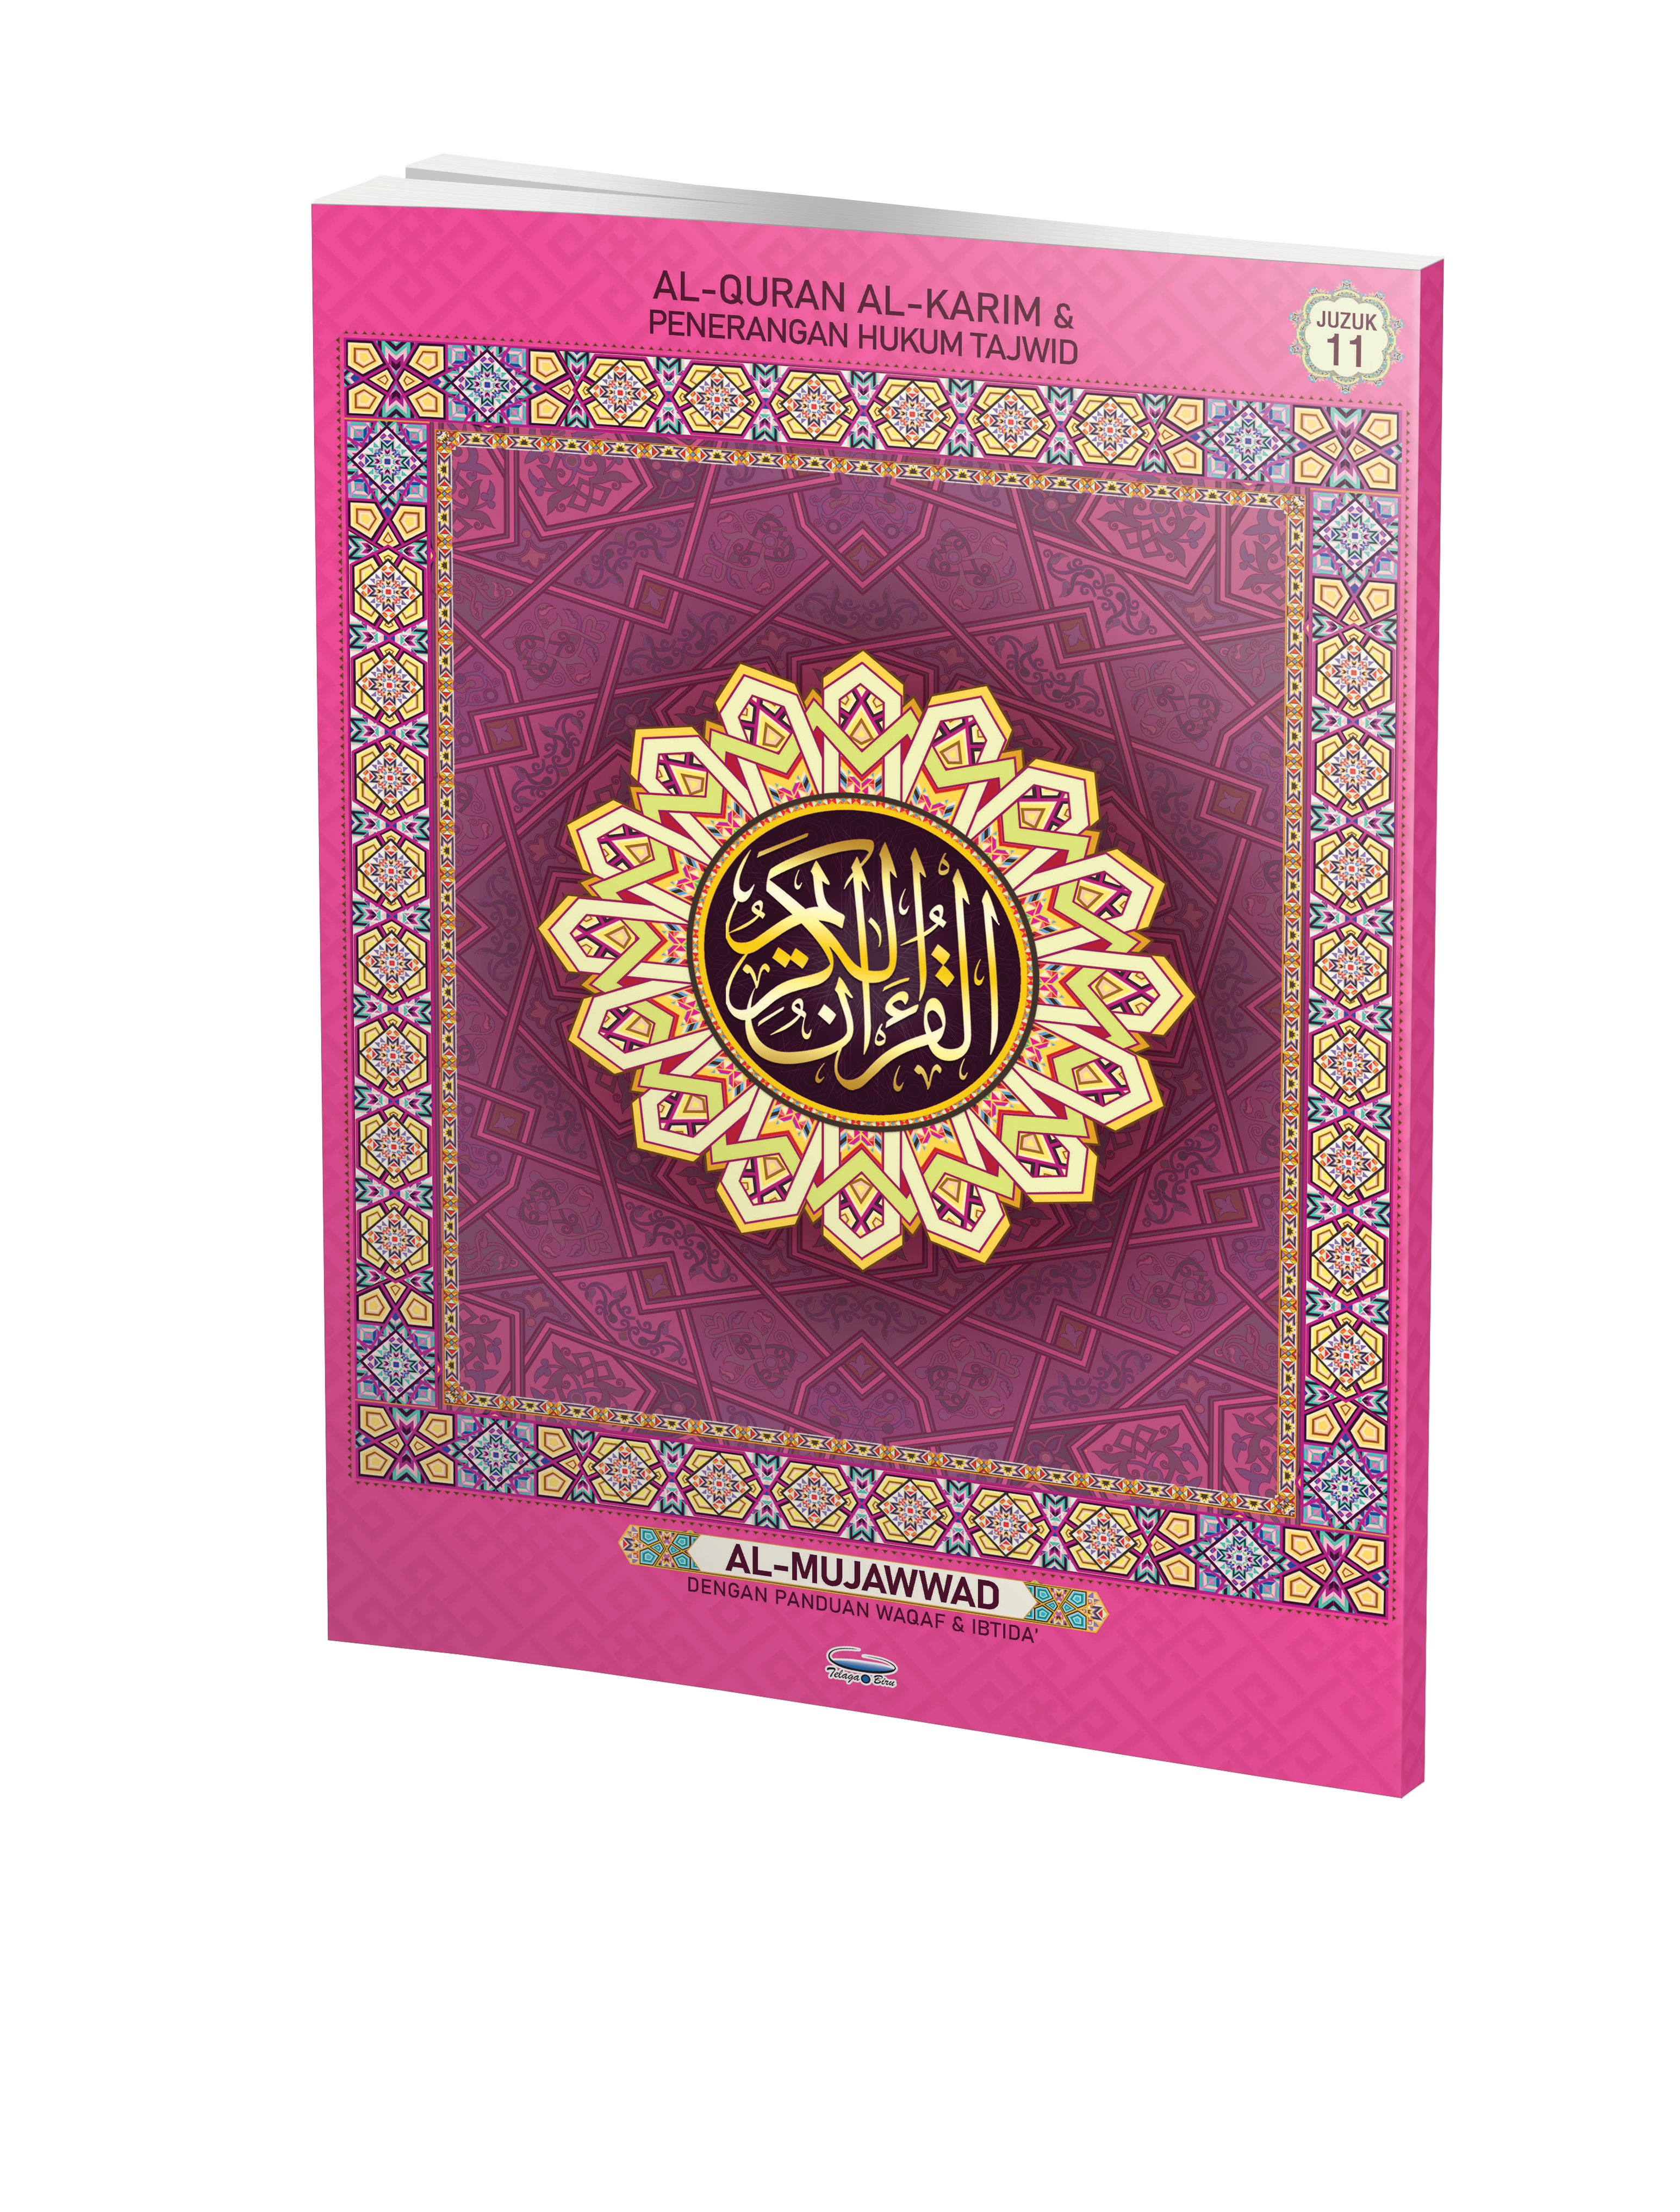 Al-Quran Al-Karim & Penerangan Hukum Tajwid Al-Mujawwad Dengan Panduan Waqaf & Ibtida’ (Perjuzuk) - (TBAQ1044)